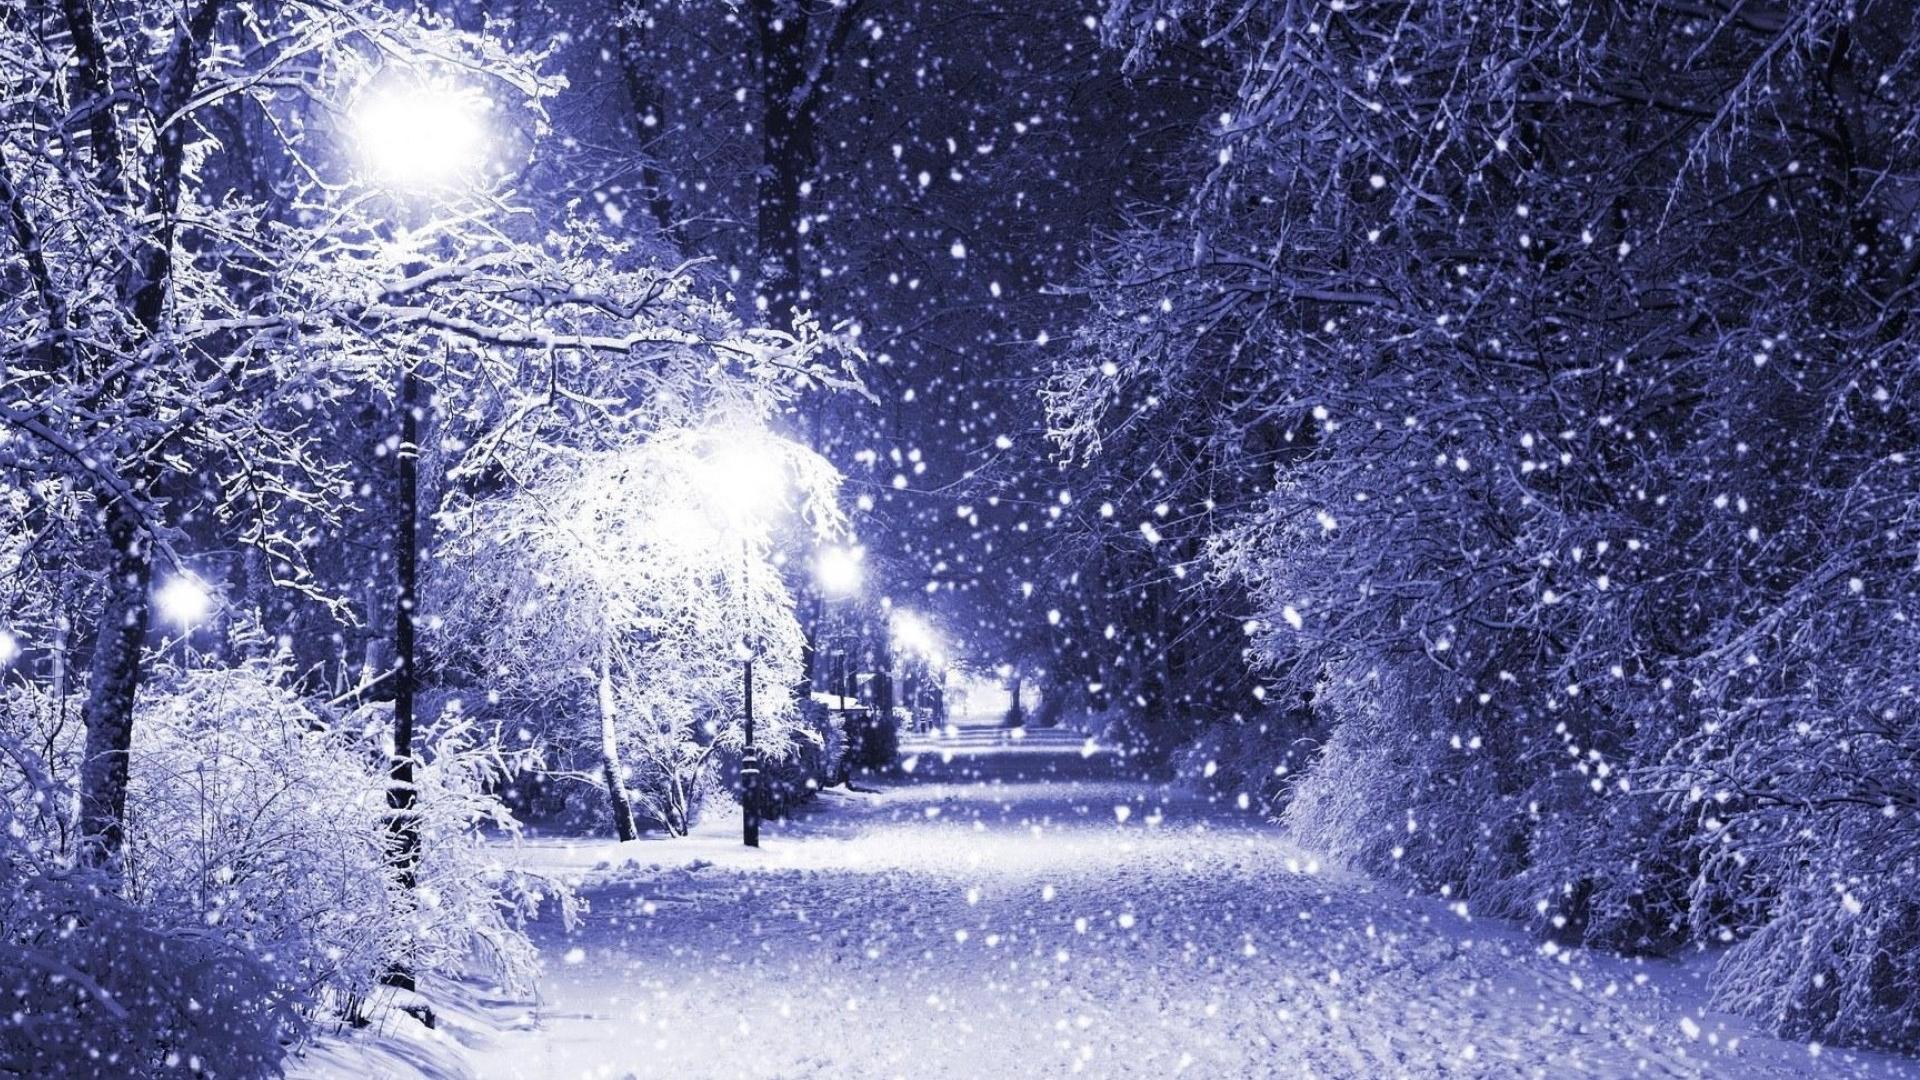 Winter Night Snow Landscape Wallpaper High Definition